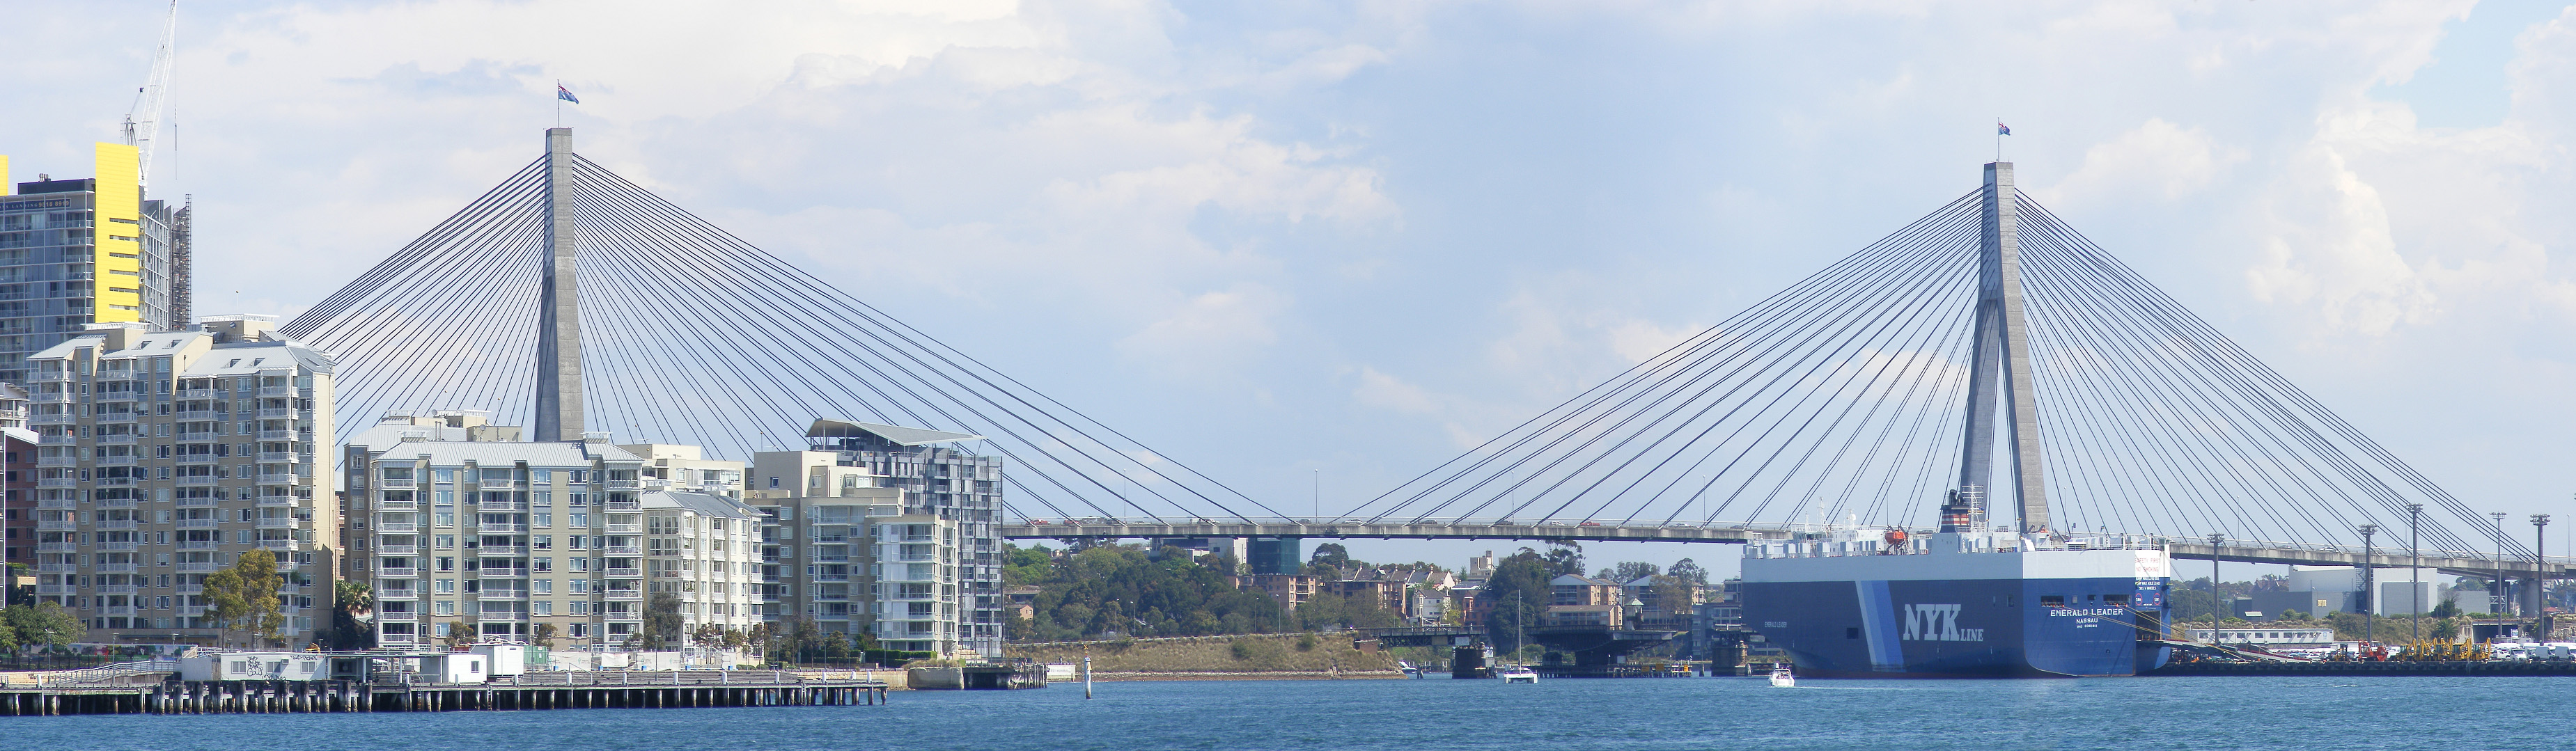 ANZAC_Bridge,_Sydney.jpg